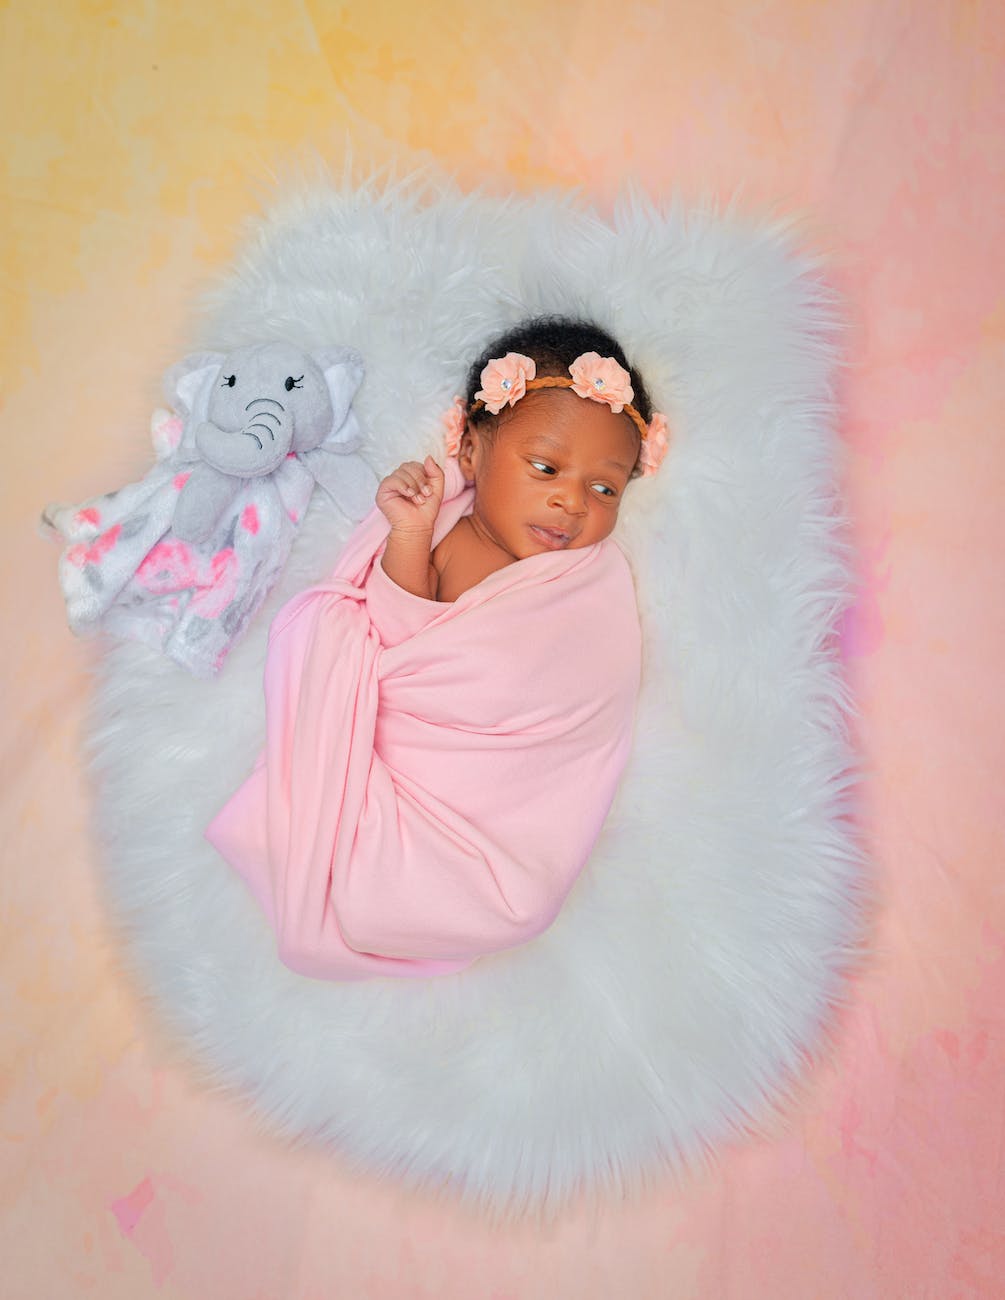 cute baby in pink swaddle lying on blue fur blanket